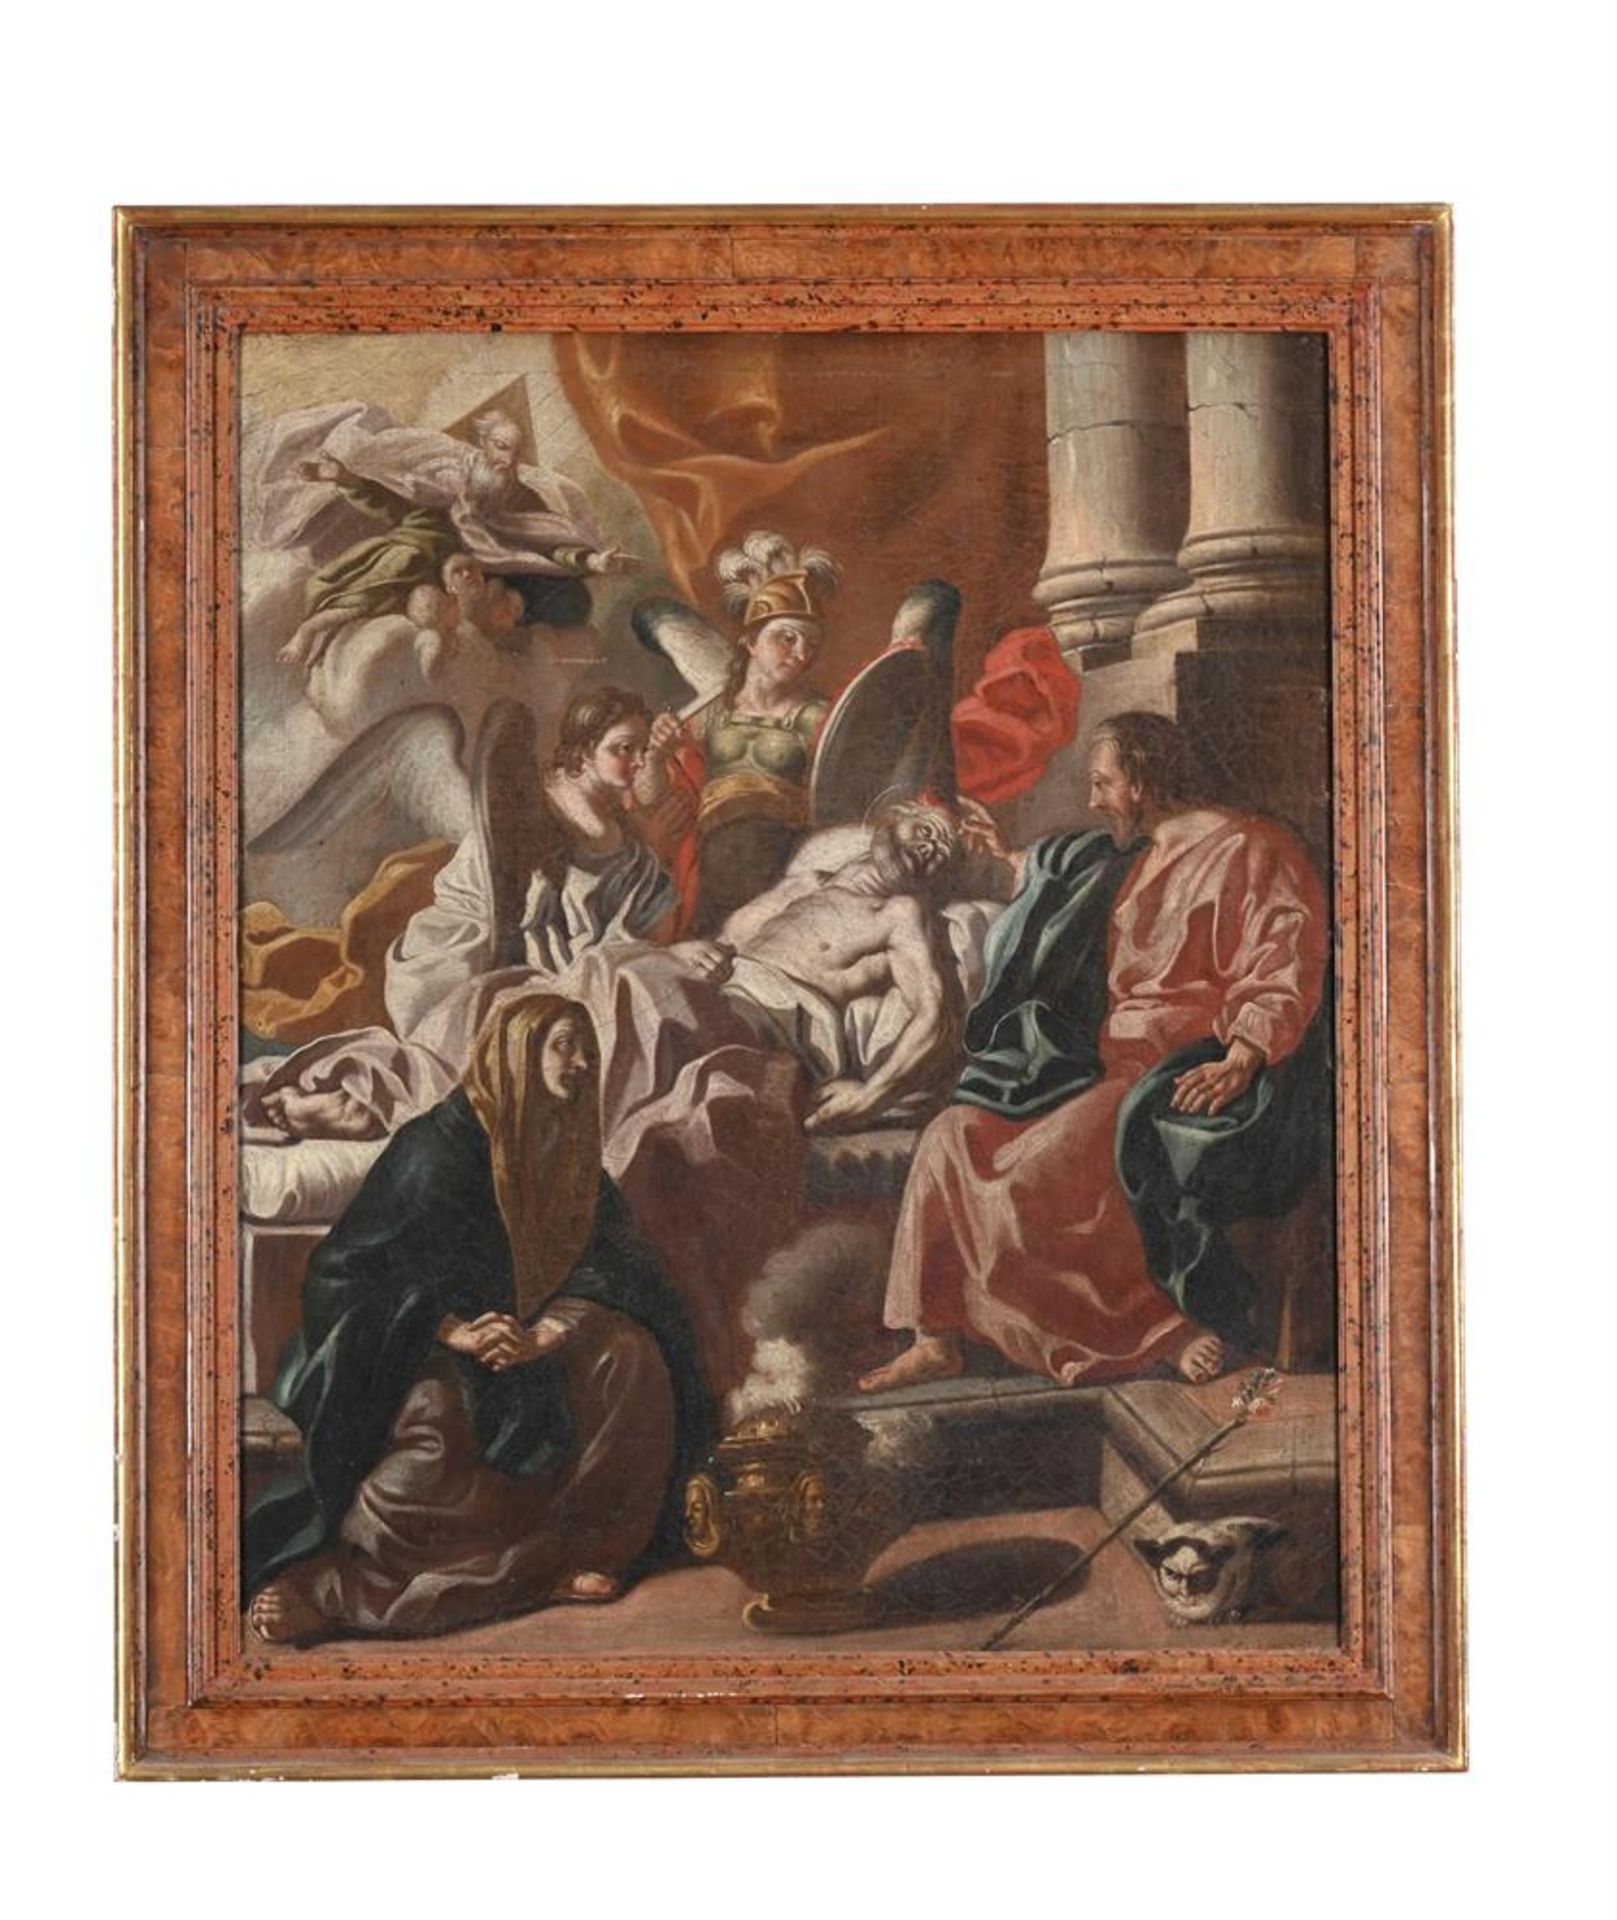 FOLLOWER OF FRANCESCO SOLIMENA, THE DEATH OF SAINT JOSEPH - Image 2 of 3